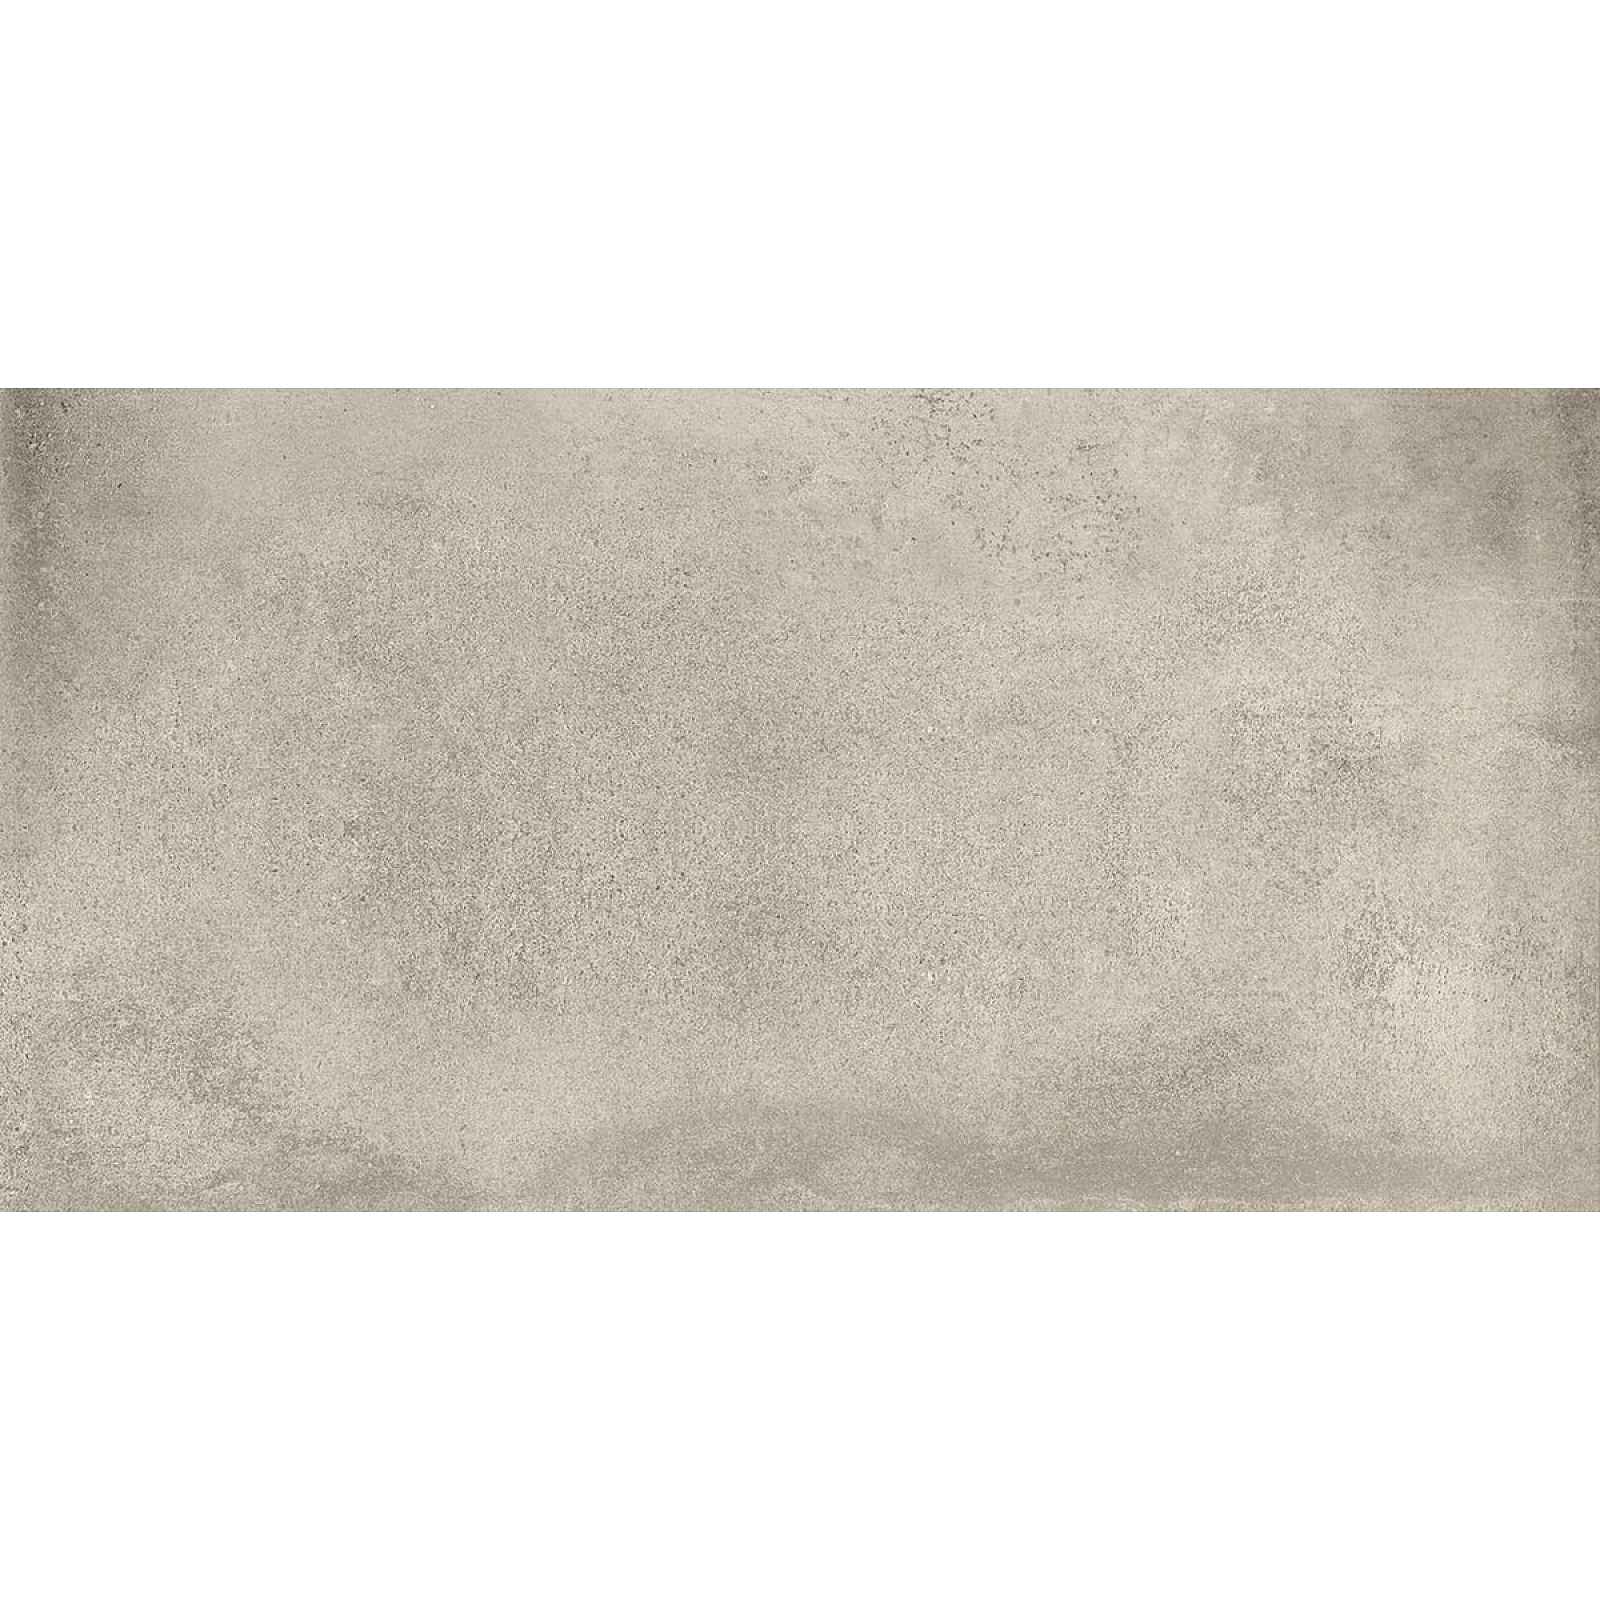 Dlažba Marconi Mila grigio scuro 30x60 cm mat MILA36GRS